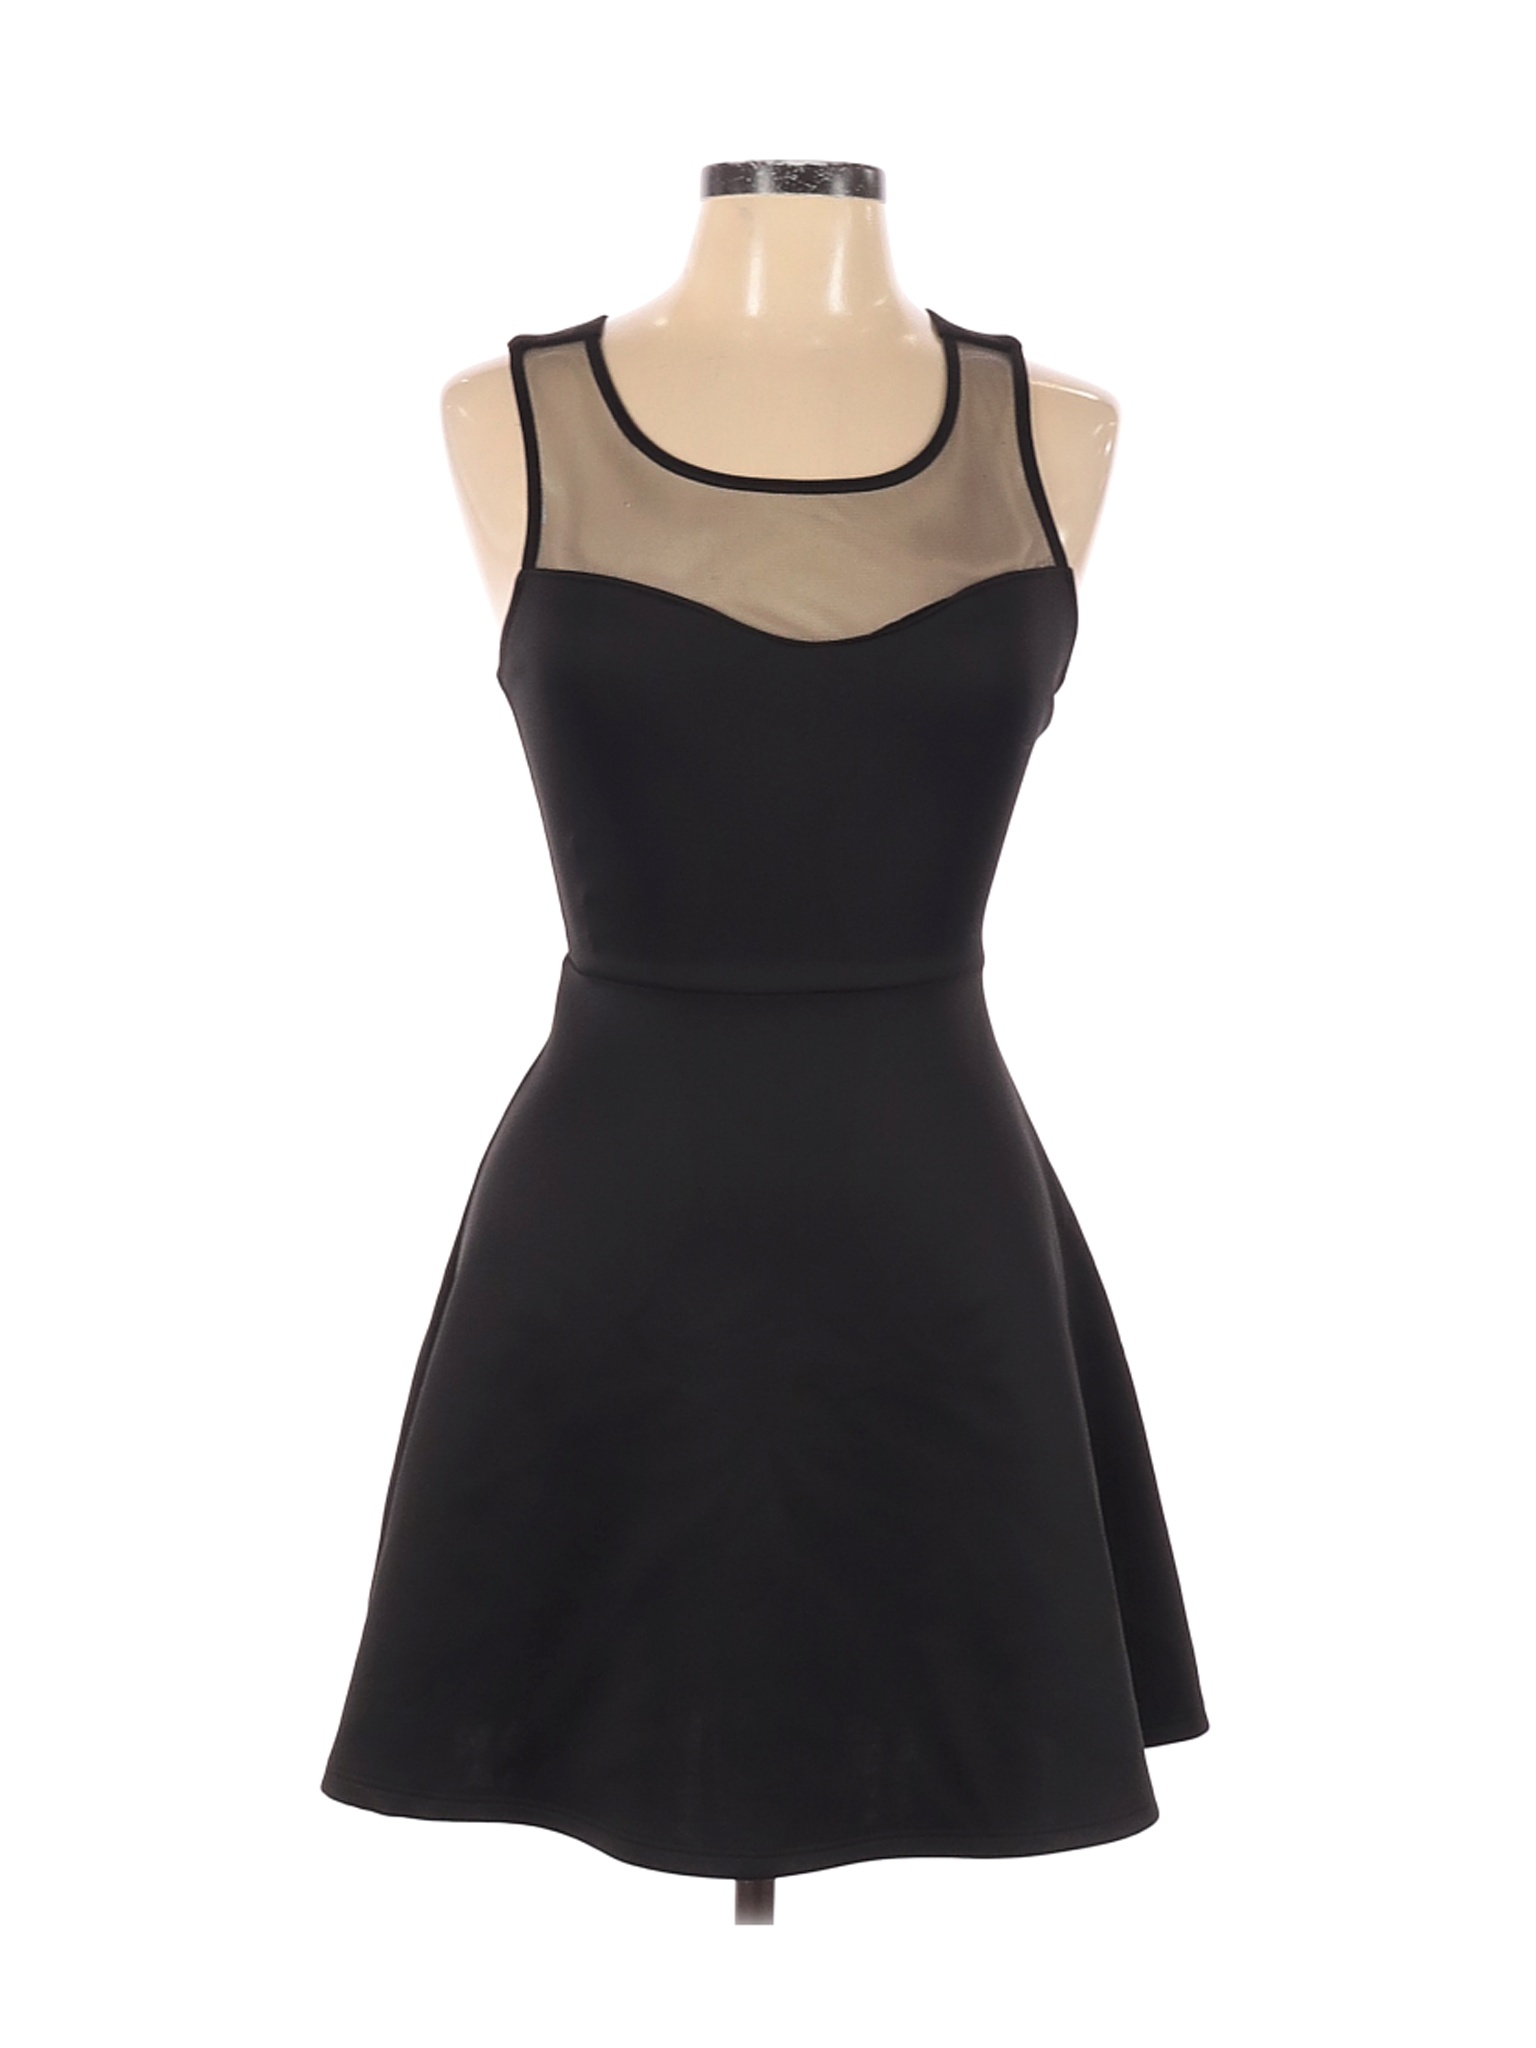 Crystal Doll Women Black Cocktail Dress L | eBay